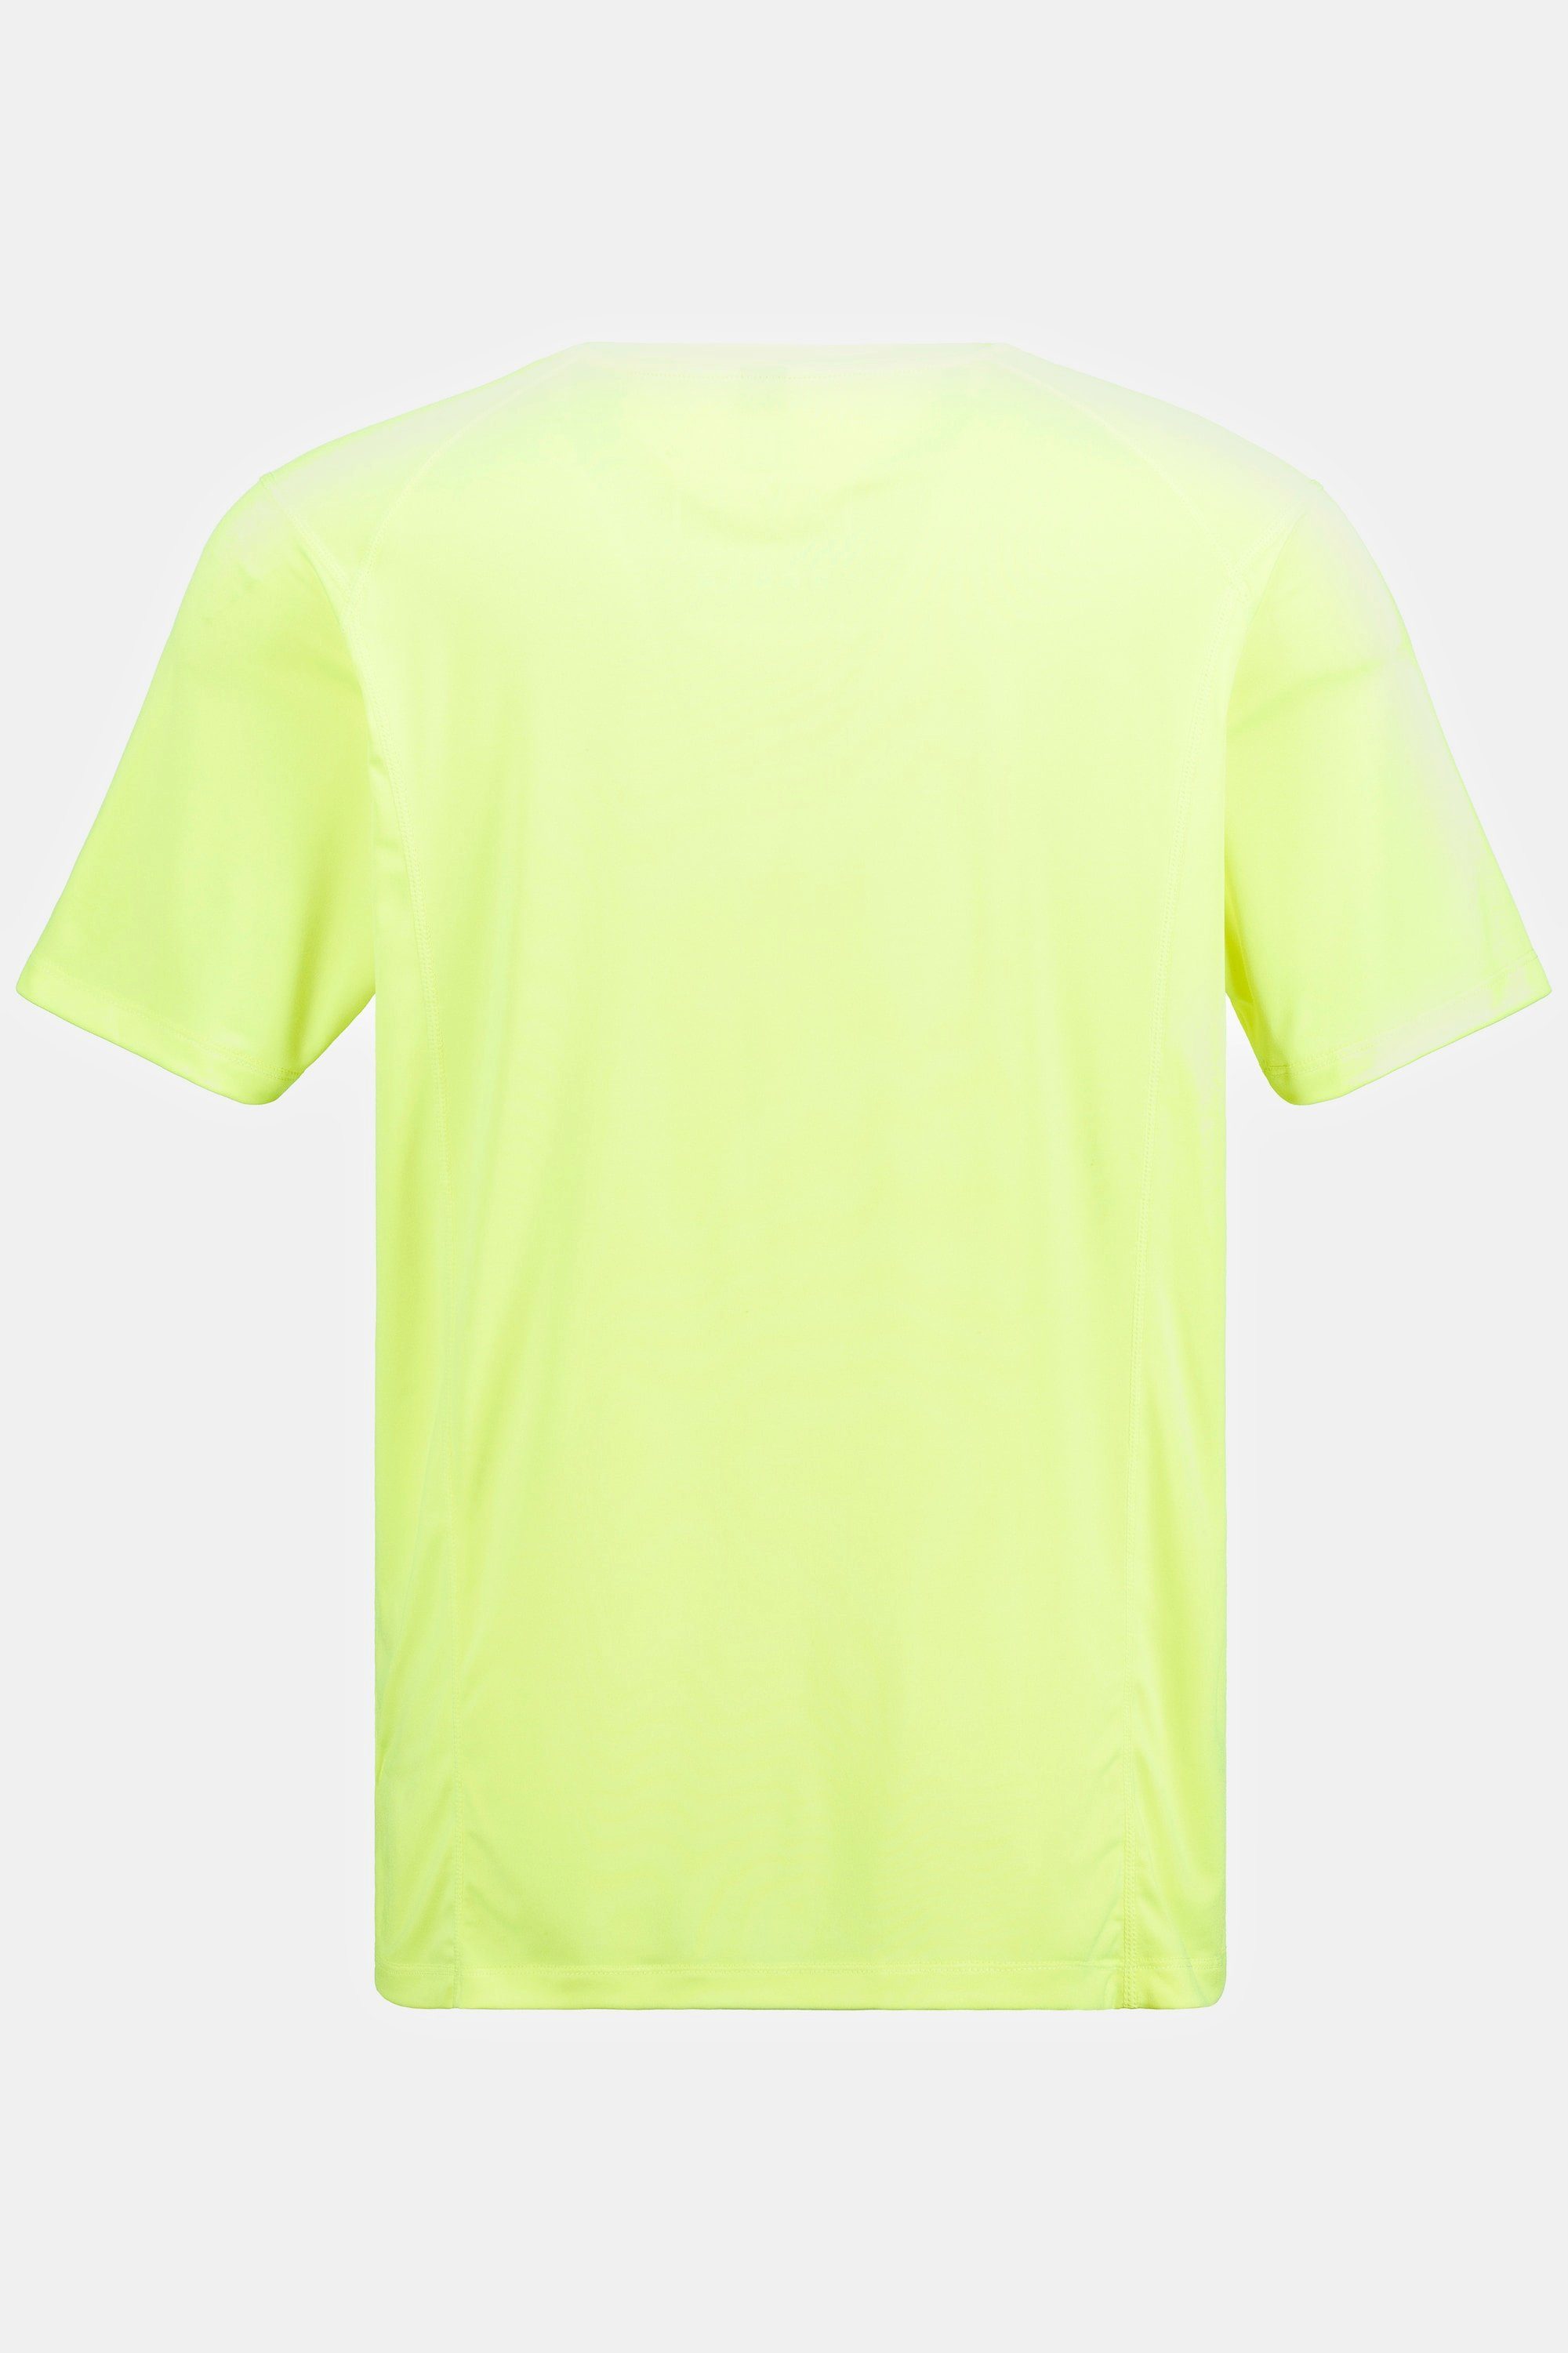 Funktions-Shirt Halbarm FLEXNAMIC® Fitness T-Shirt limette JP1880